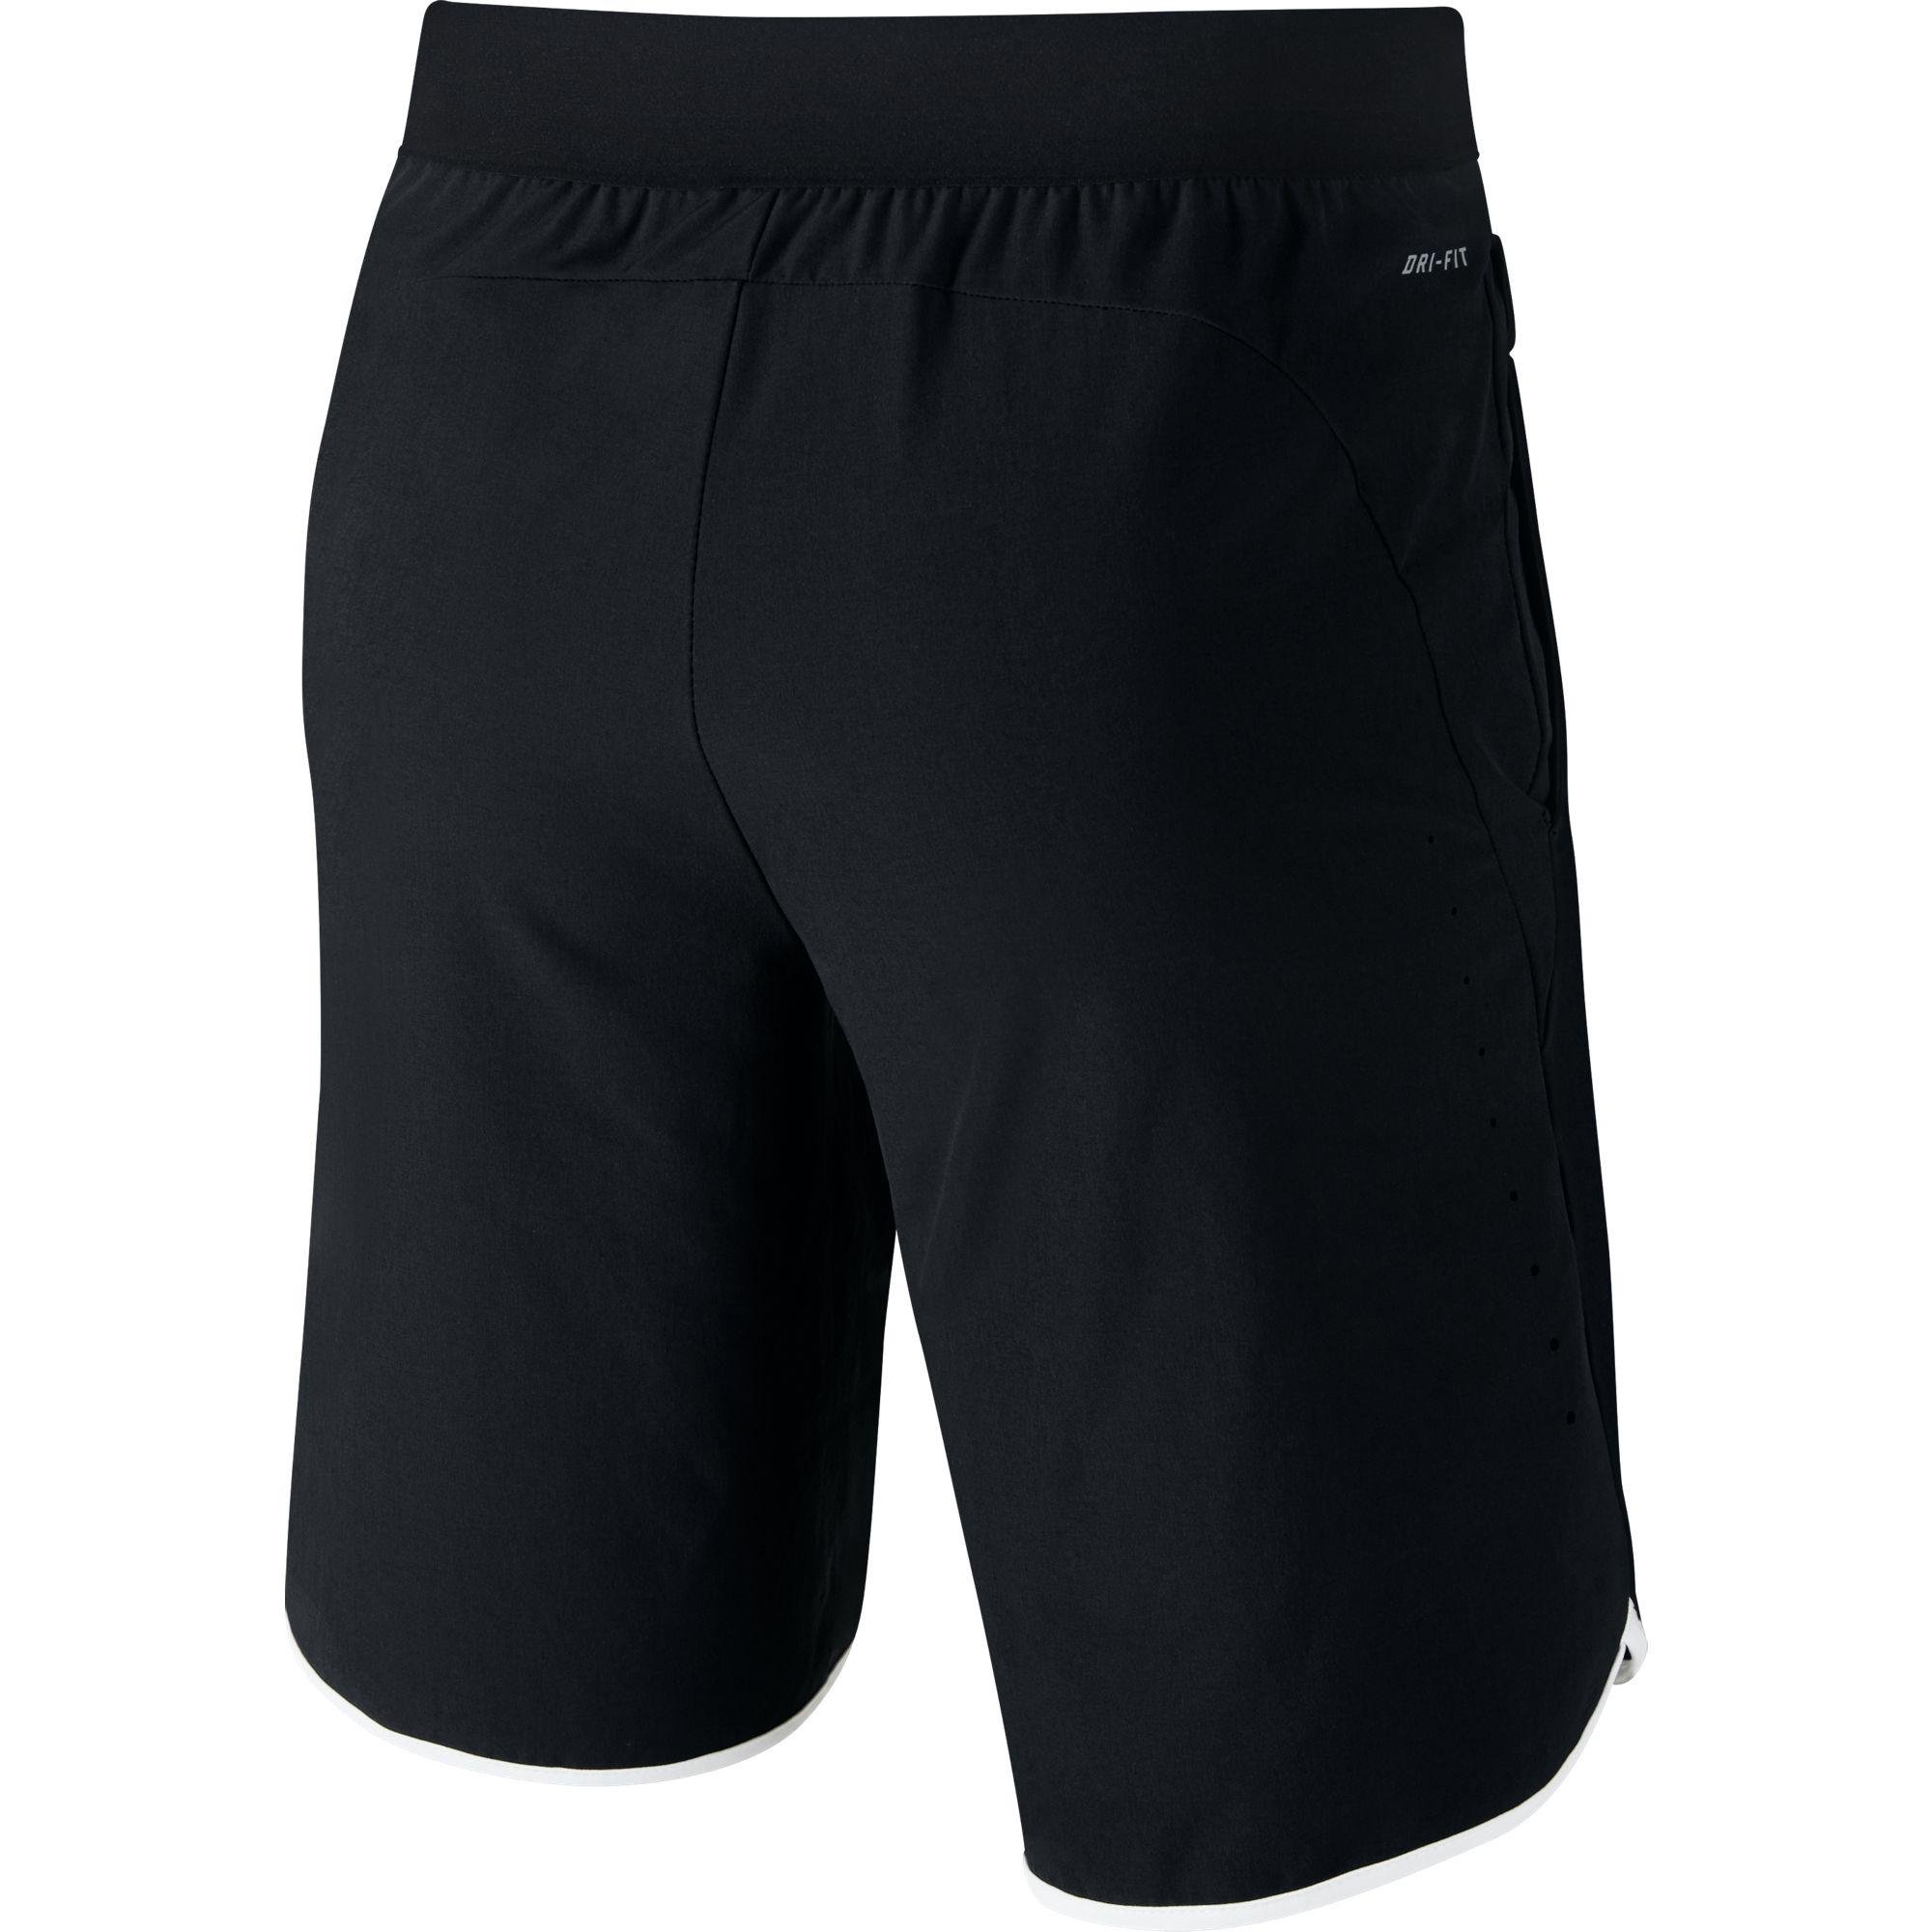 Nike Boys Gladiator Shorts - Black/White - Tennisnuts.com